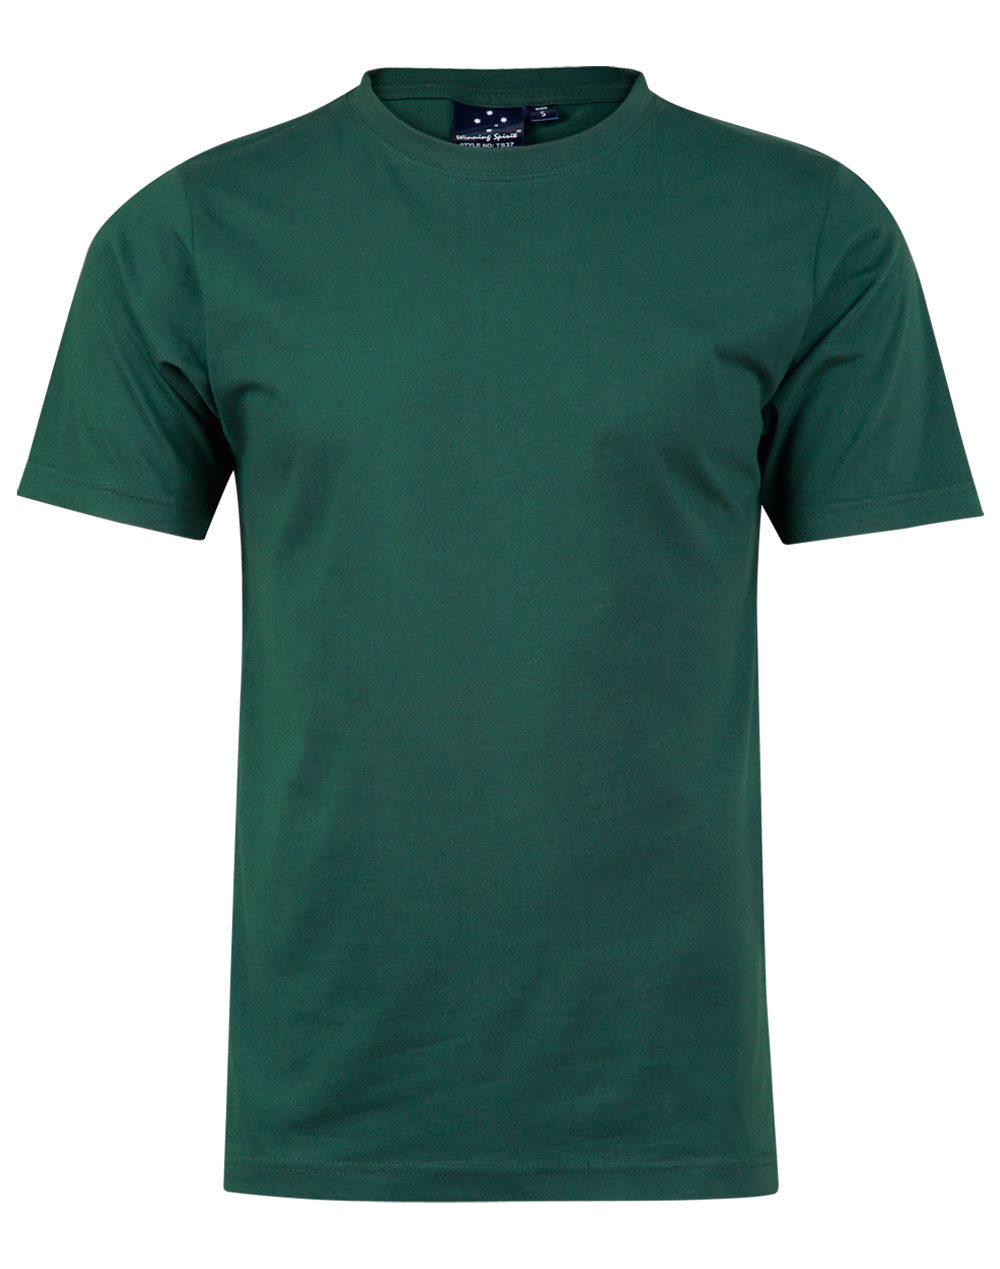 Custom (Royal) Semi-Fitted T-Shirts Men's Online in Perh Australia